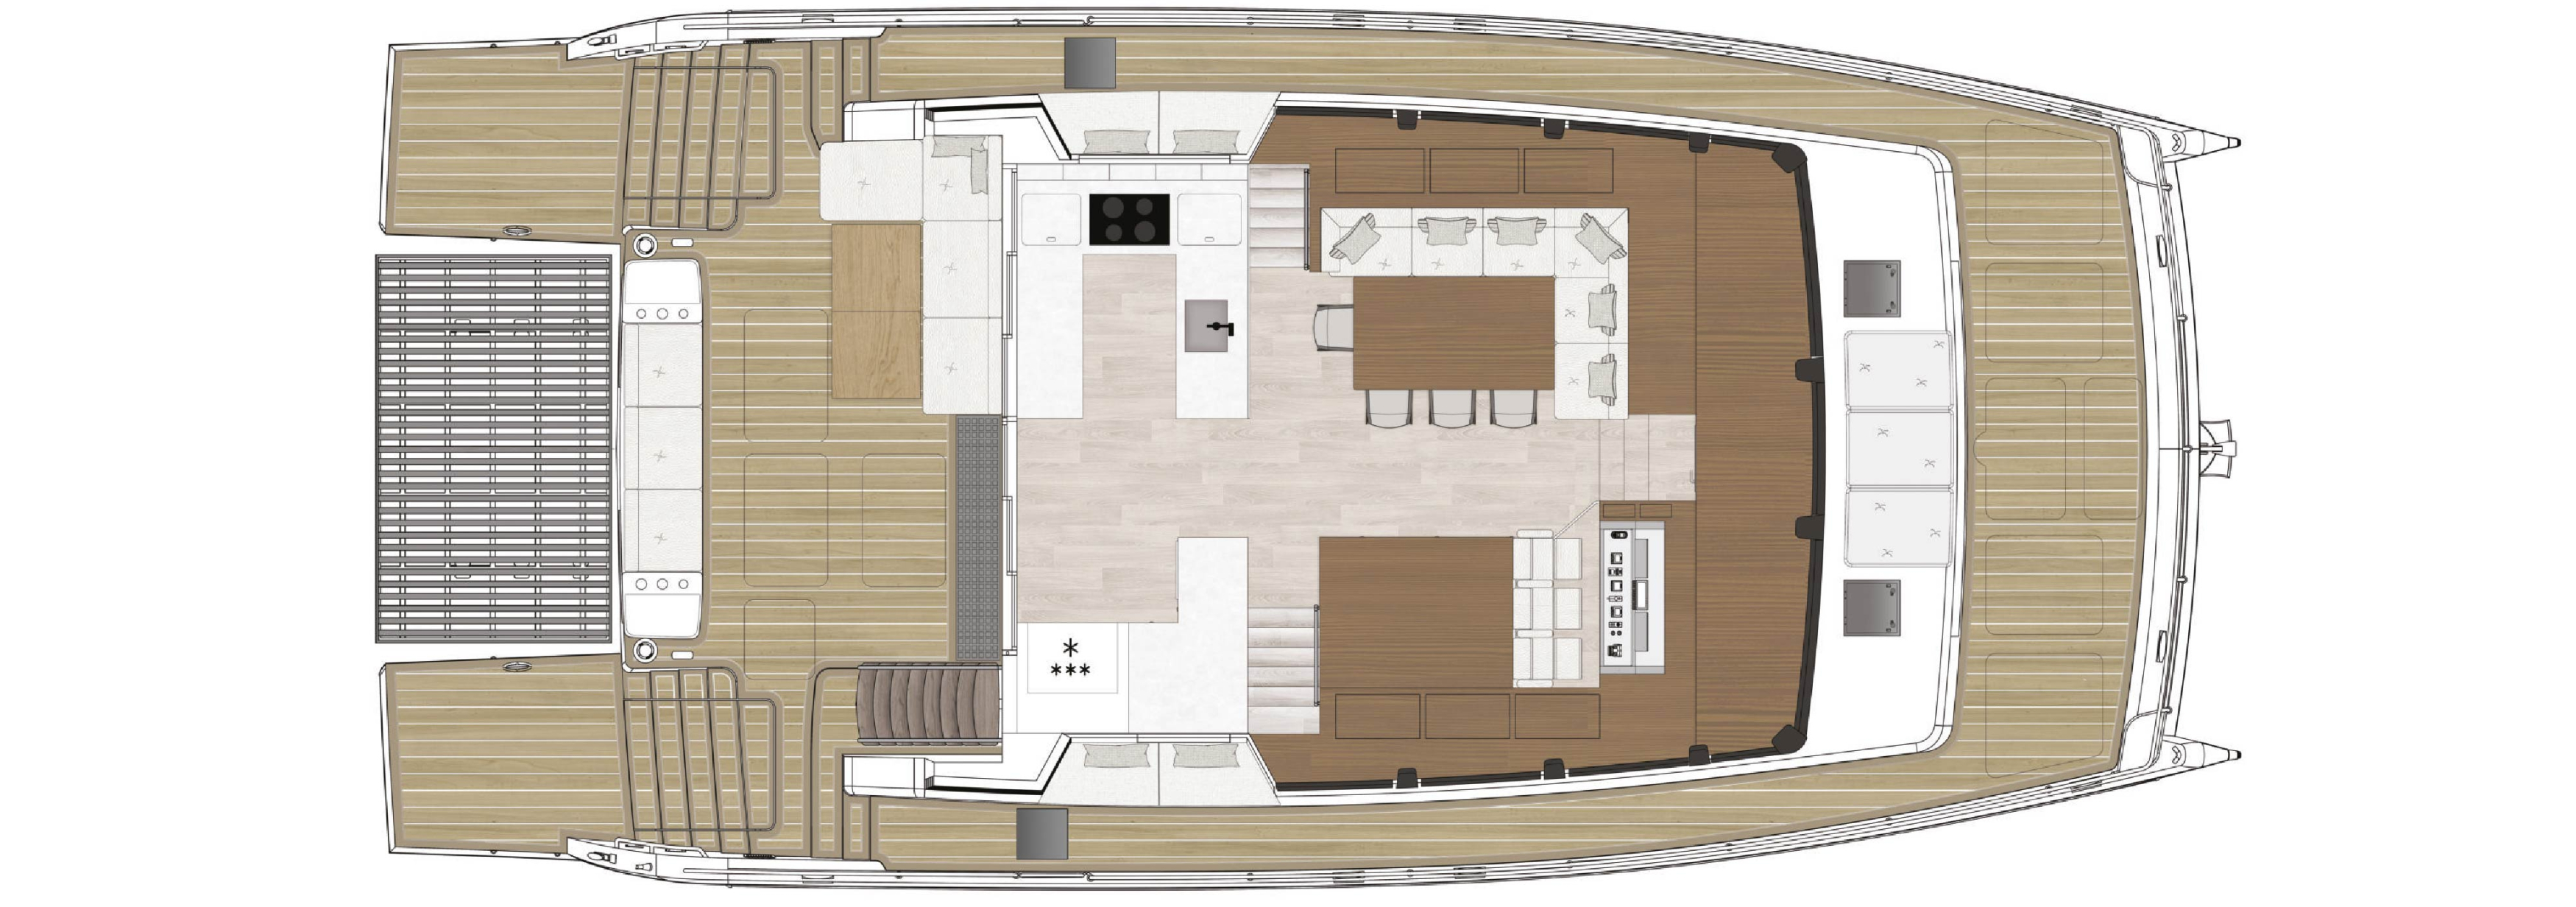 Yacht main deck front master plan